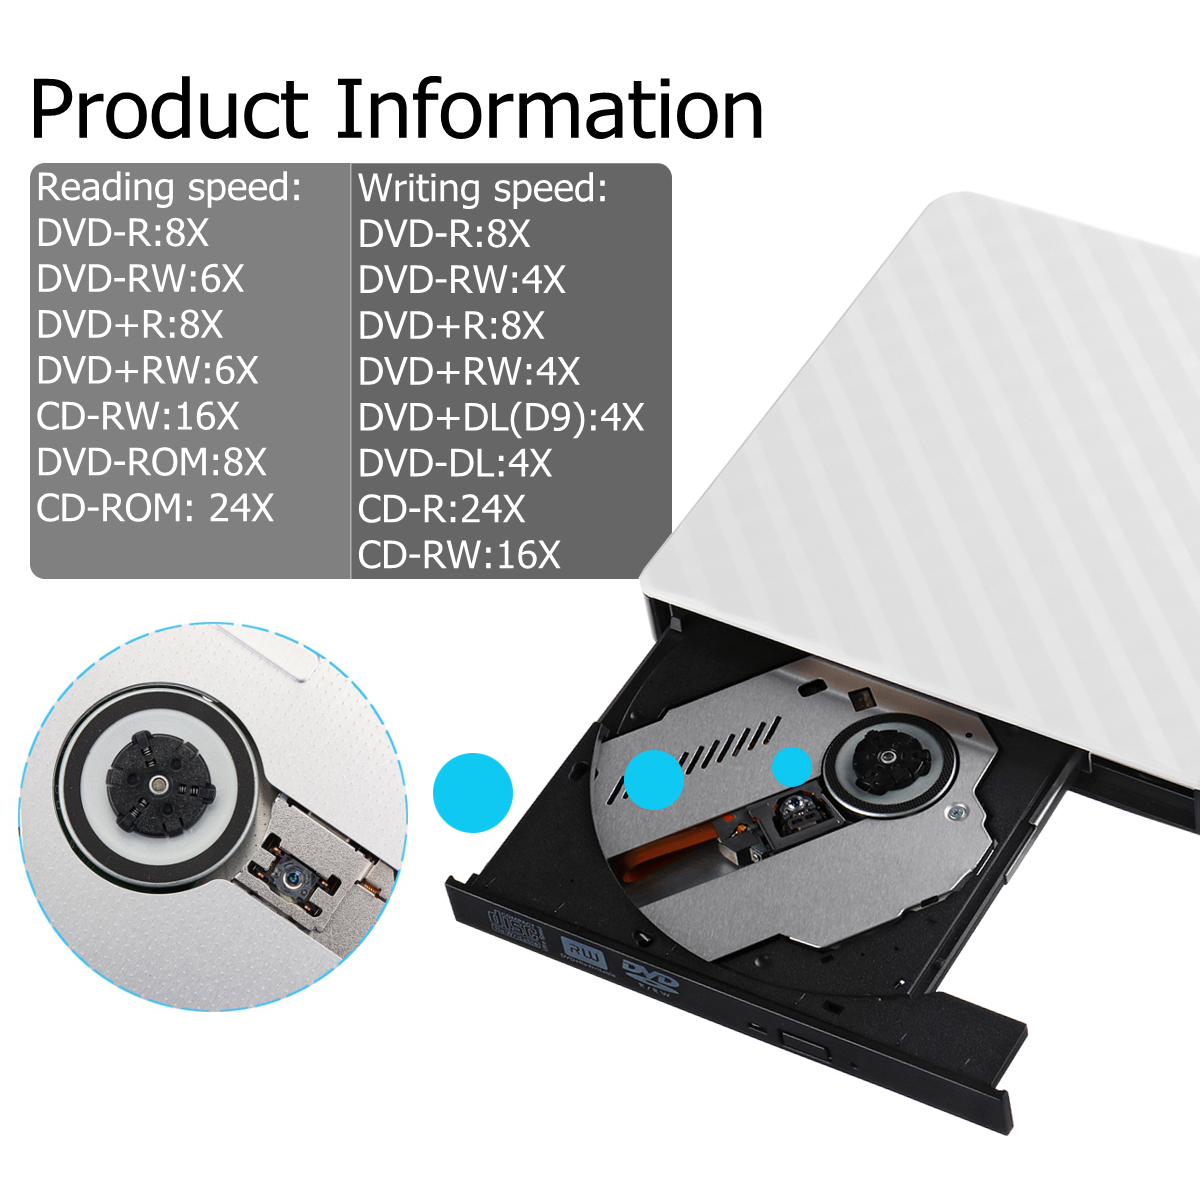 External-USB-30-DVD-RW-CD-Writer-Slim-Carbon-Grain-Drive-Burner-Reader-Player-For-PC-Laptop-Optical--1536013-5